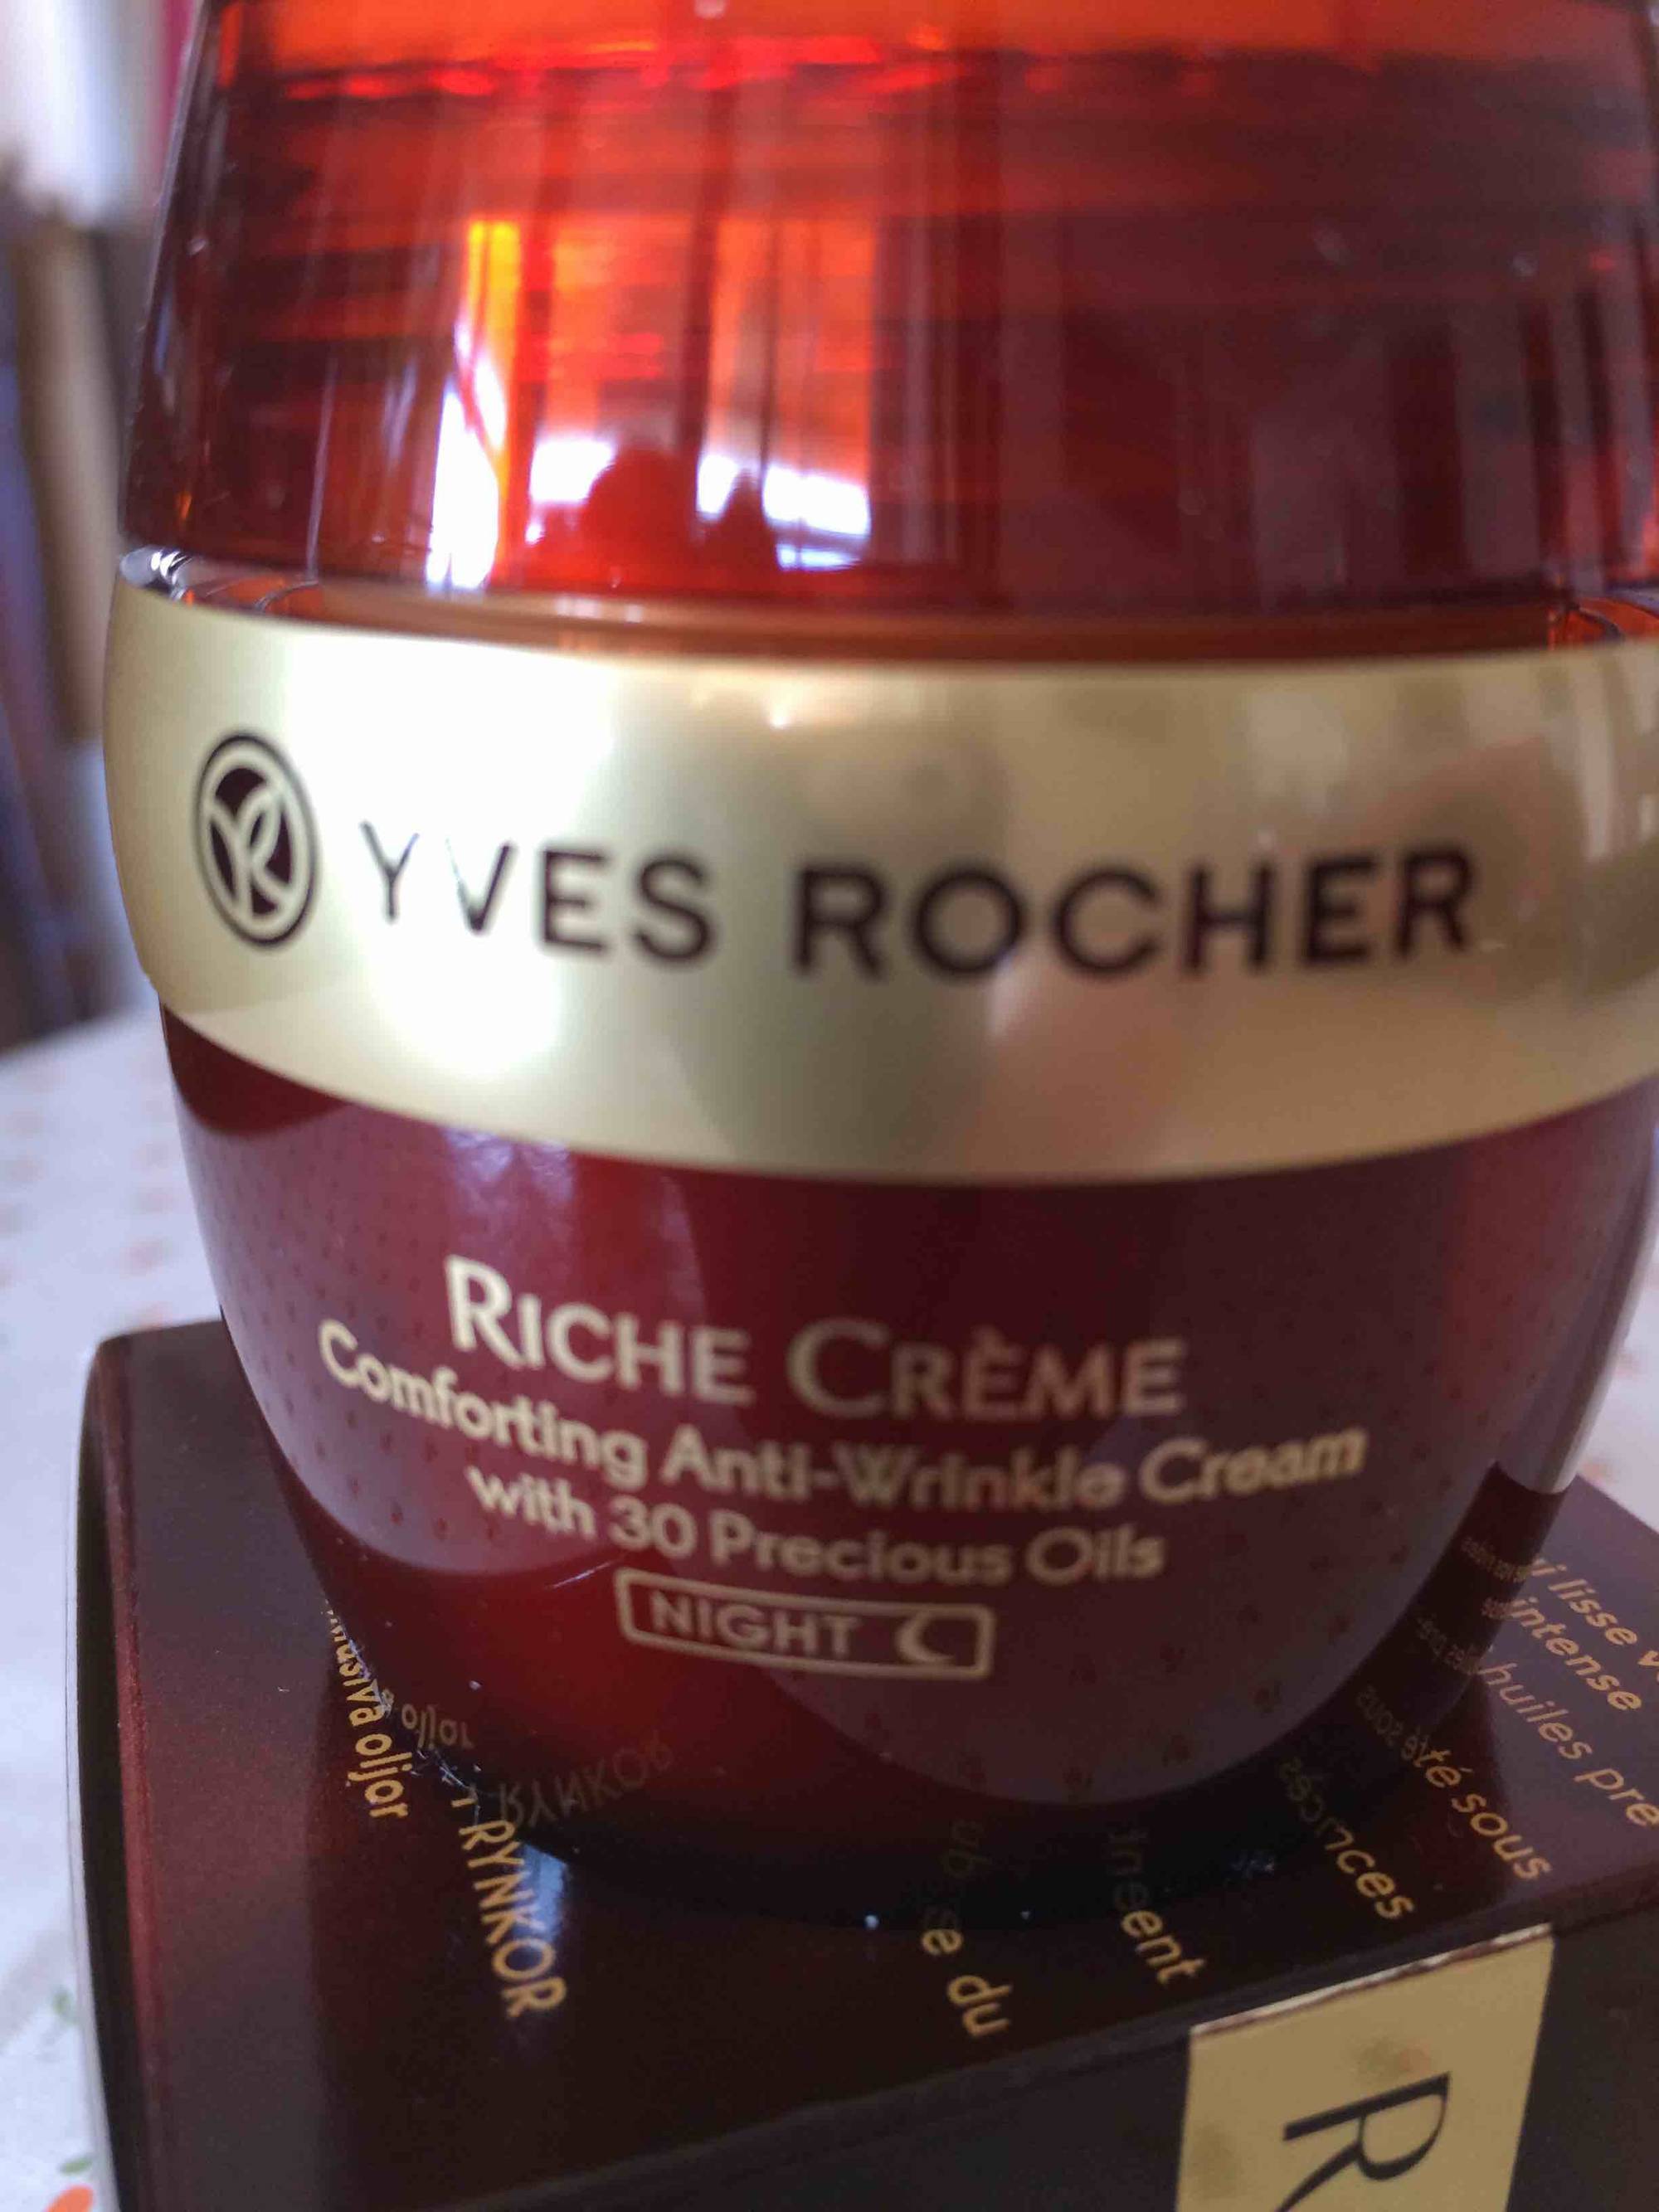 YVES ROCHER - Riche crème - Comforting anti-wrinkle cream